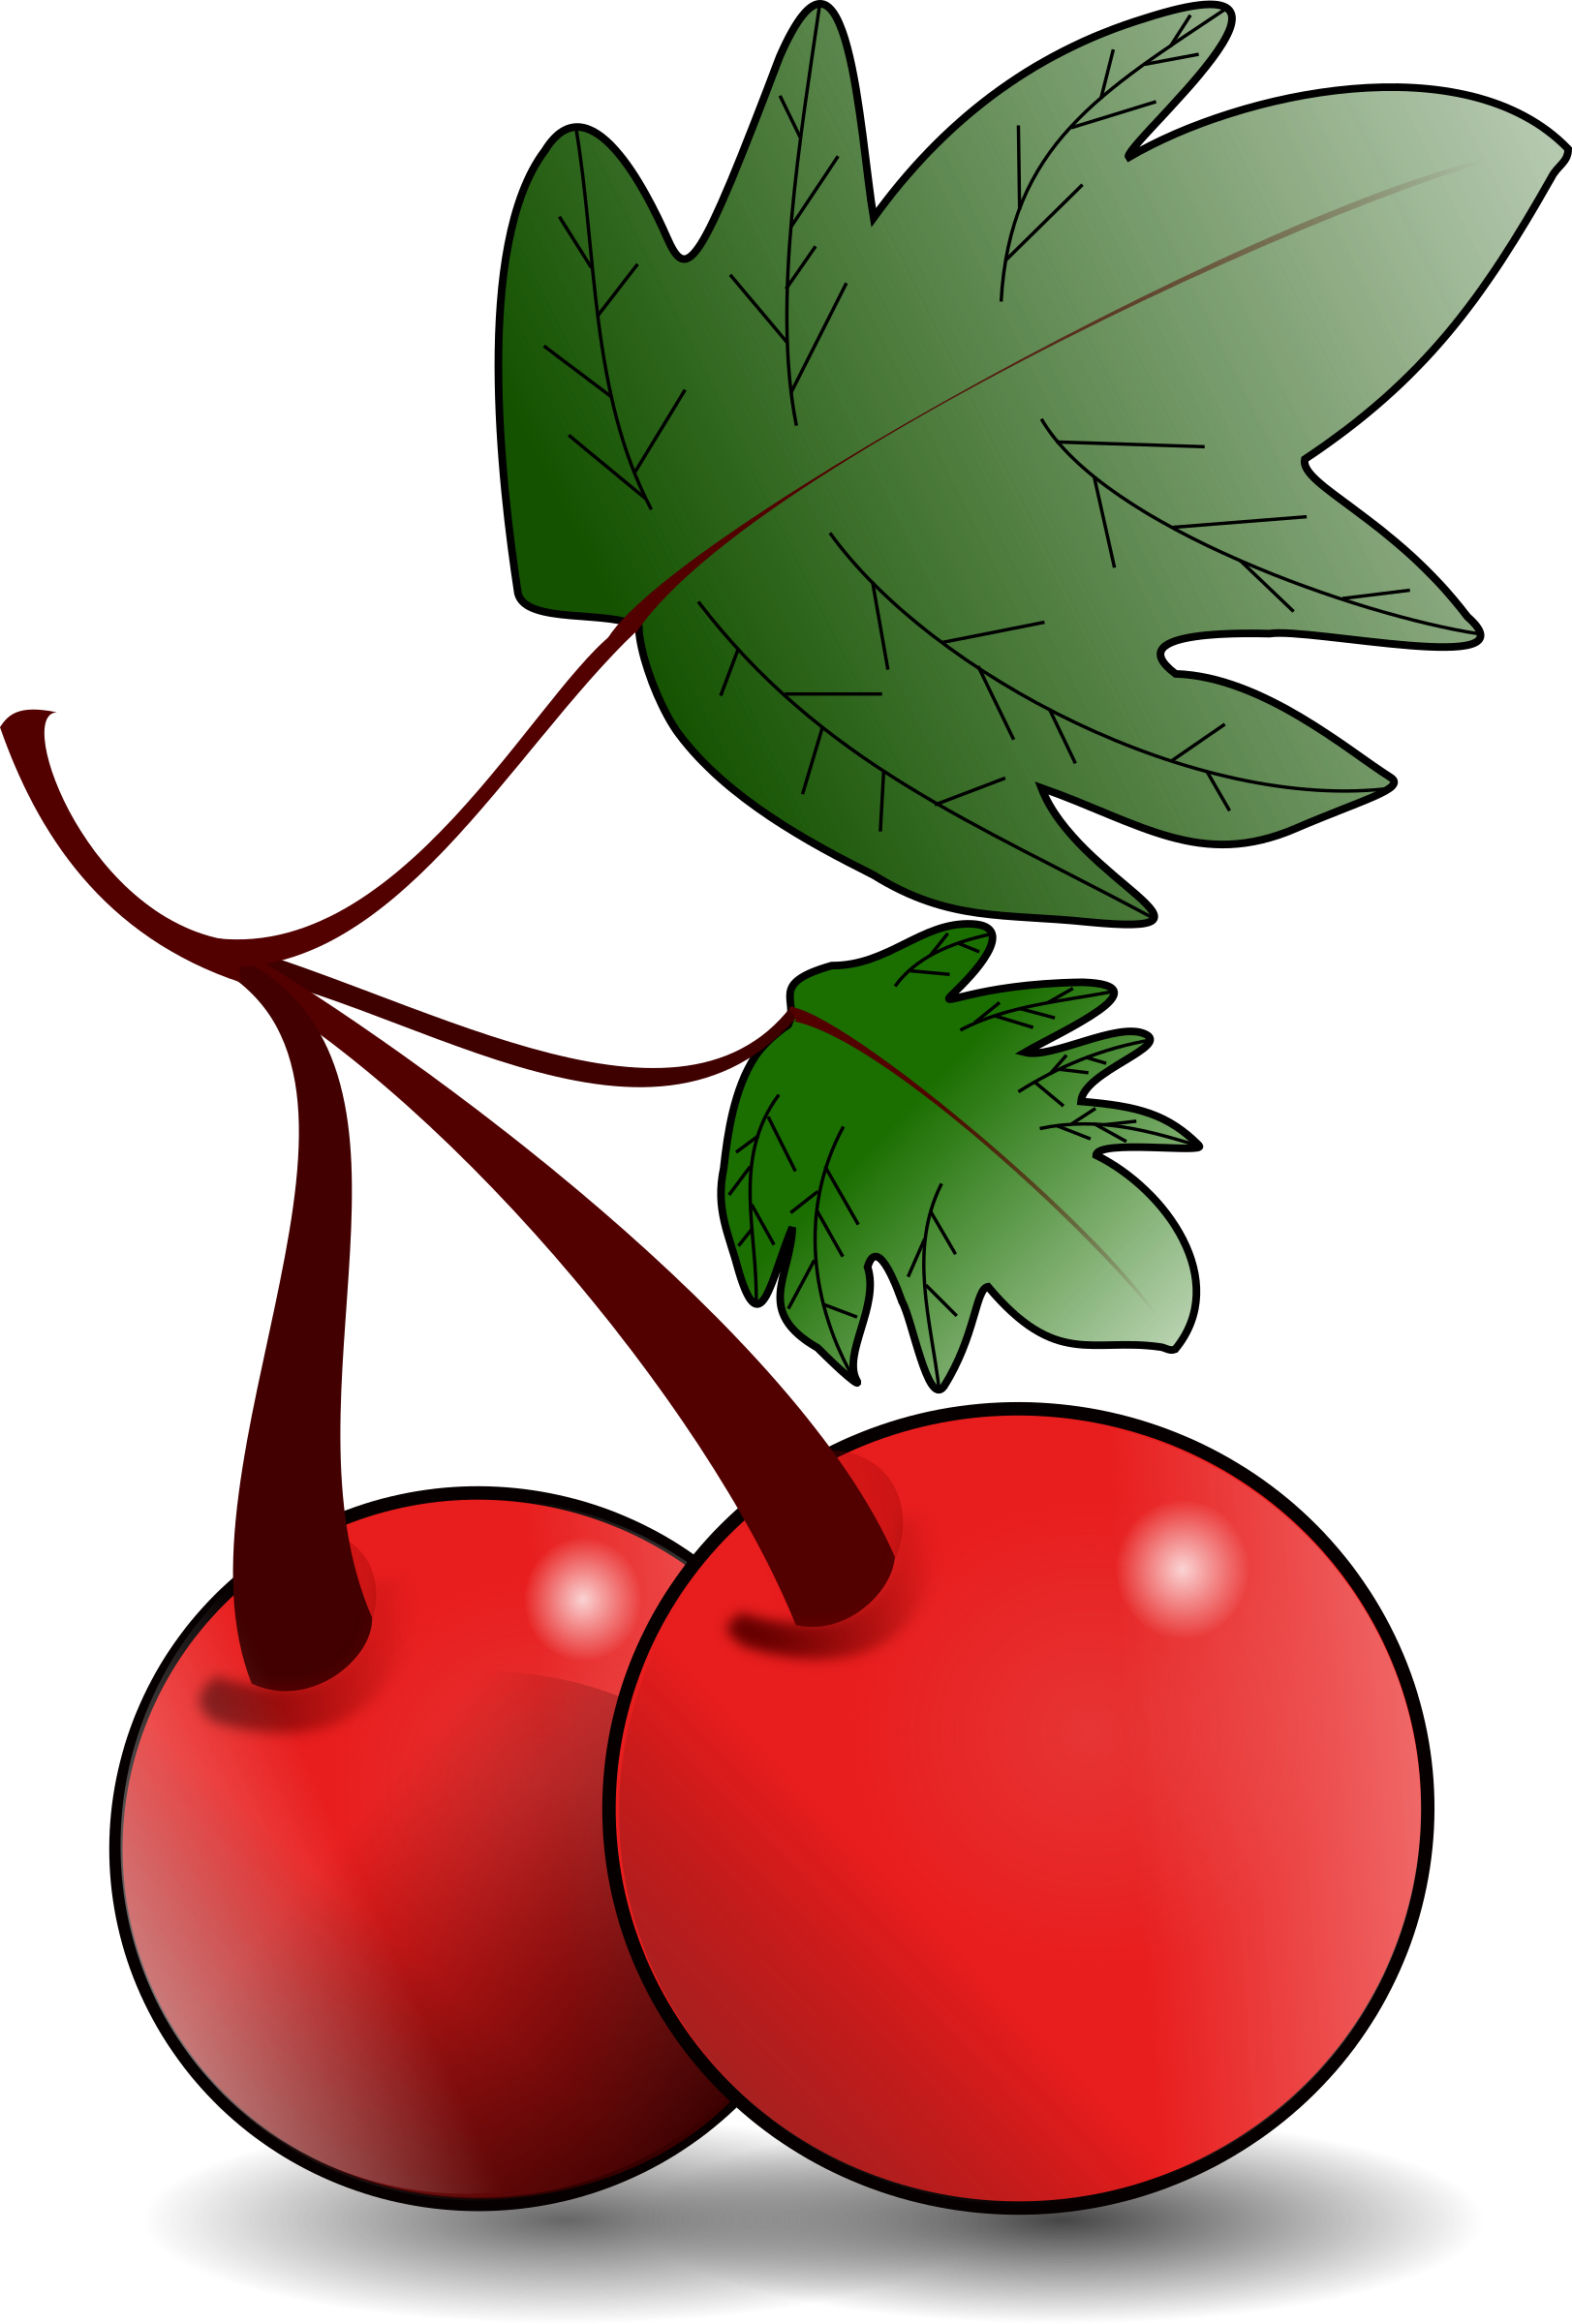 Cherries SVG Clip arts